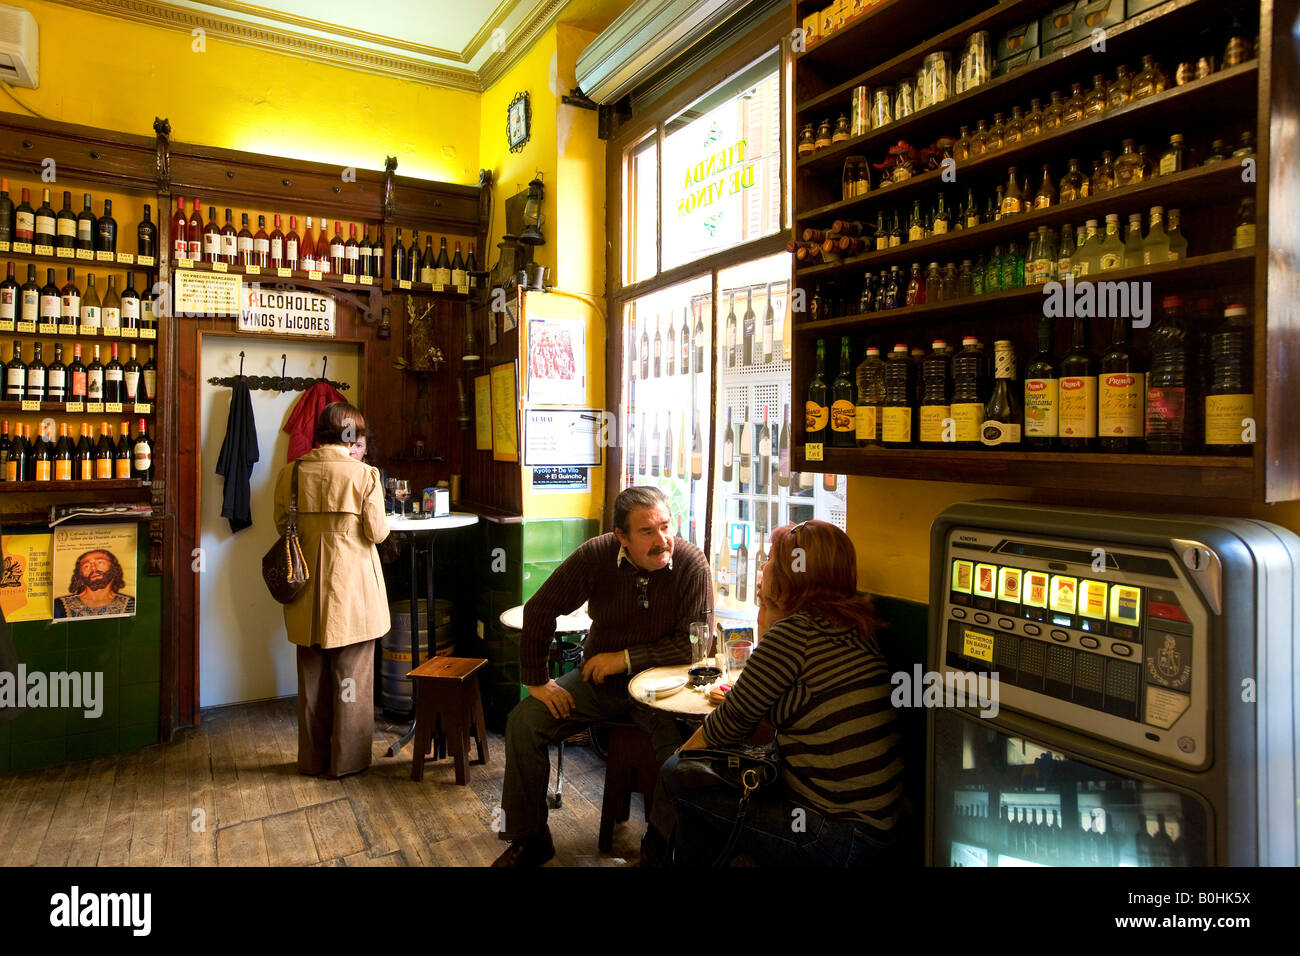 Almau Bodega, wine bar e taverna, i clienti seduti sotto i cestelli di bottiglie di vino, zona El Tubo, Saragozza, Saragozza, Aragona, S Foto Stock